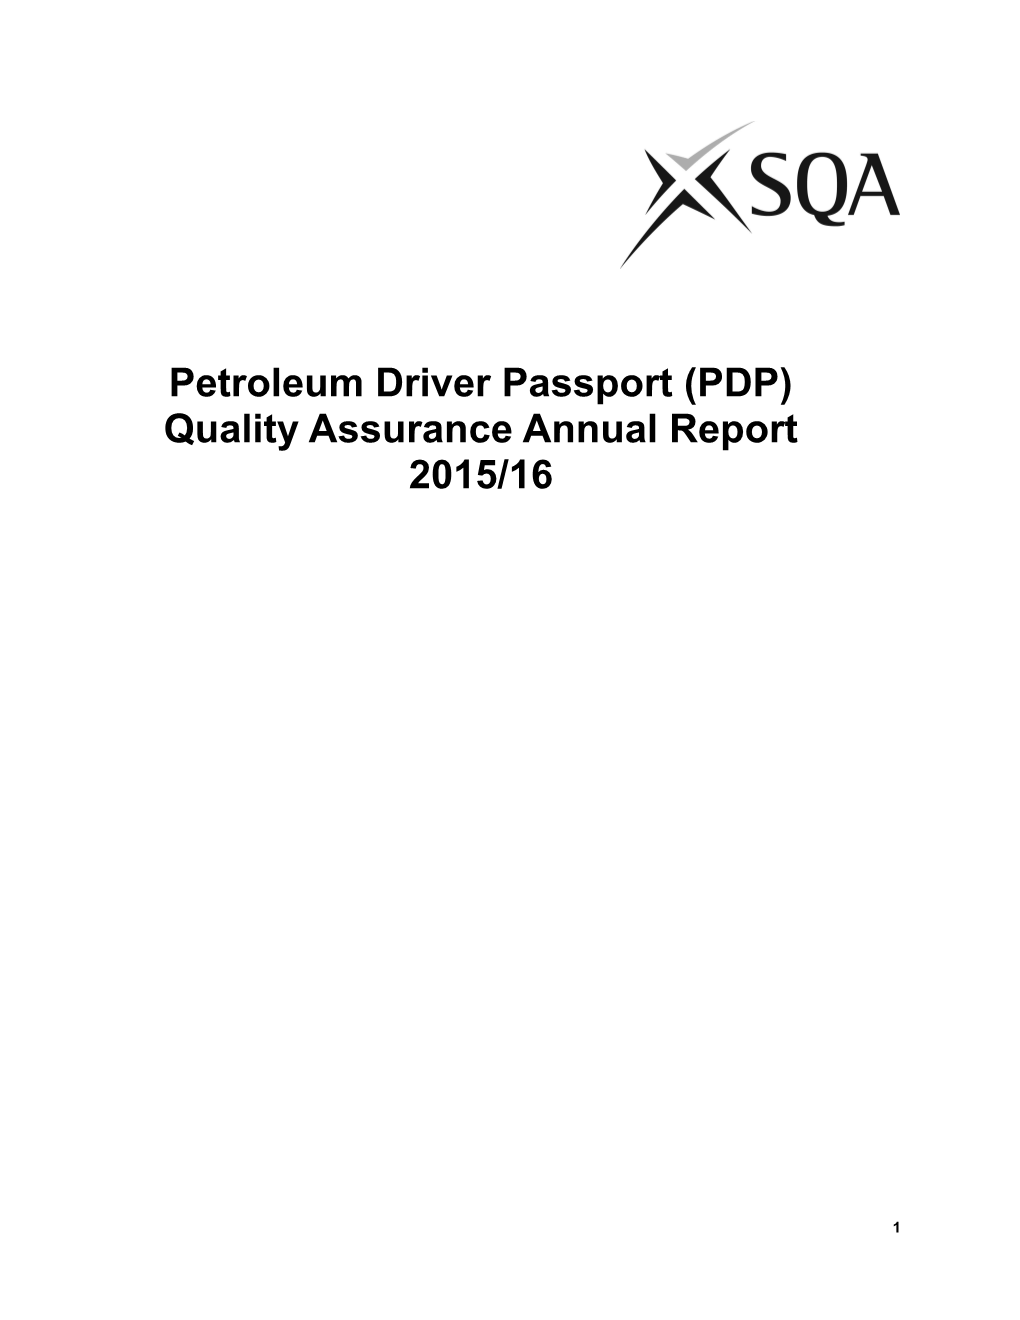 Petroleum Driver Passport (PDP) Quality Assurance Annual Report 2015/16